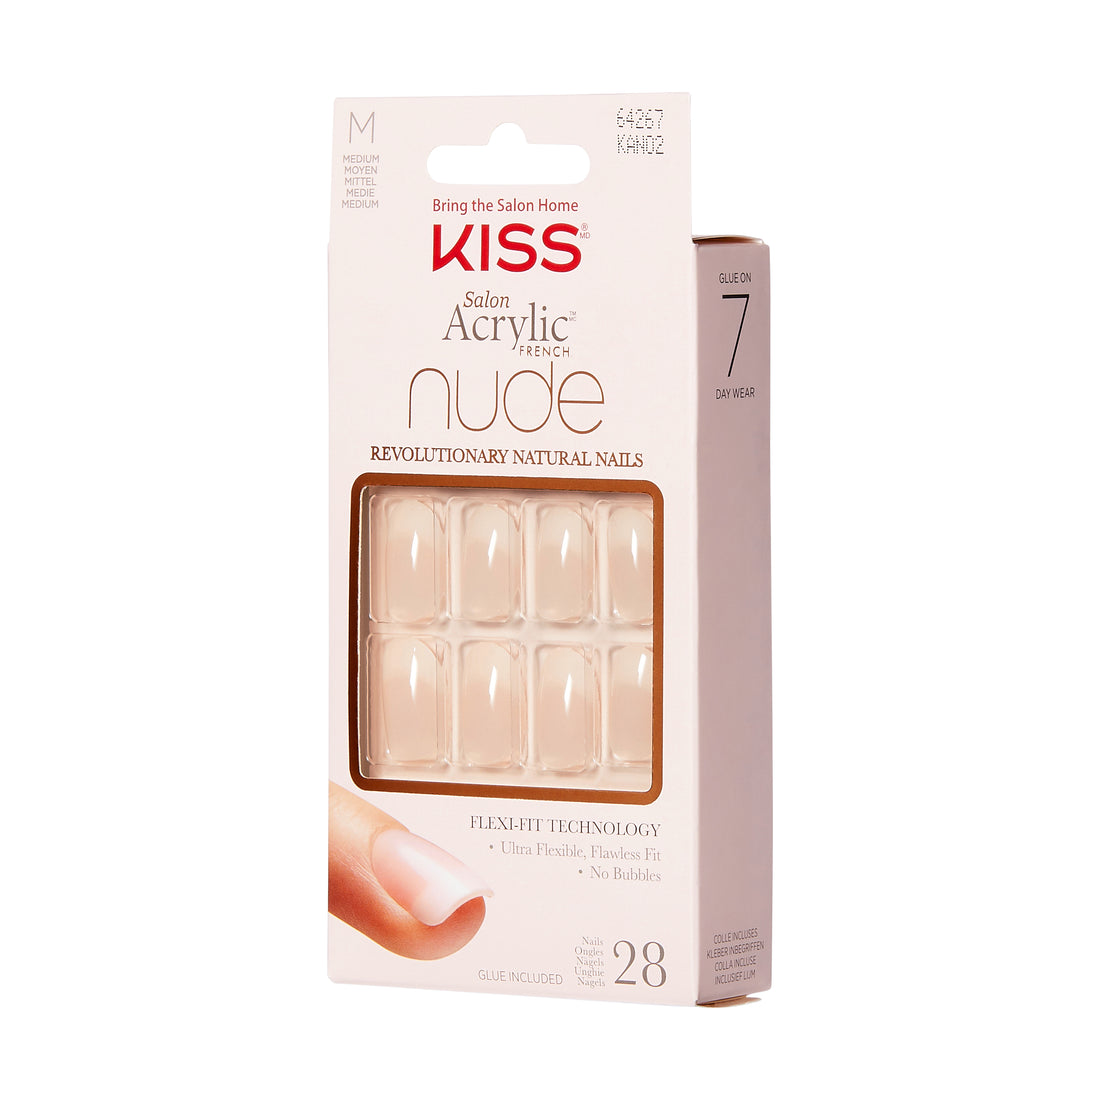 KISS Salon Acrylic Nude French Press-On Nails - Graceful